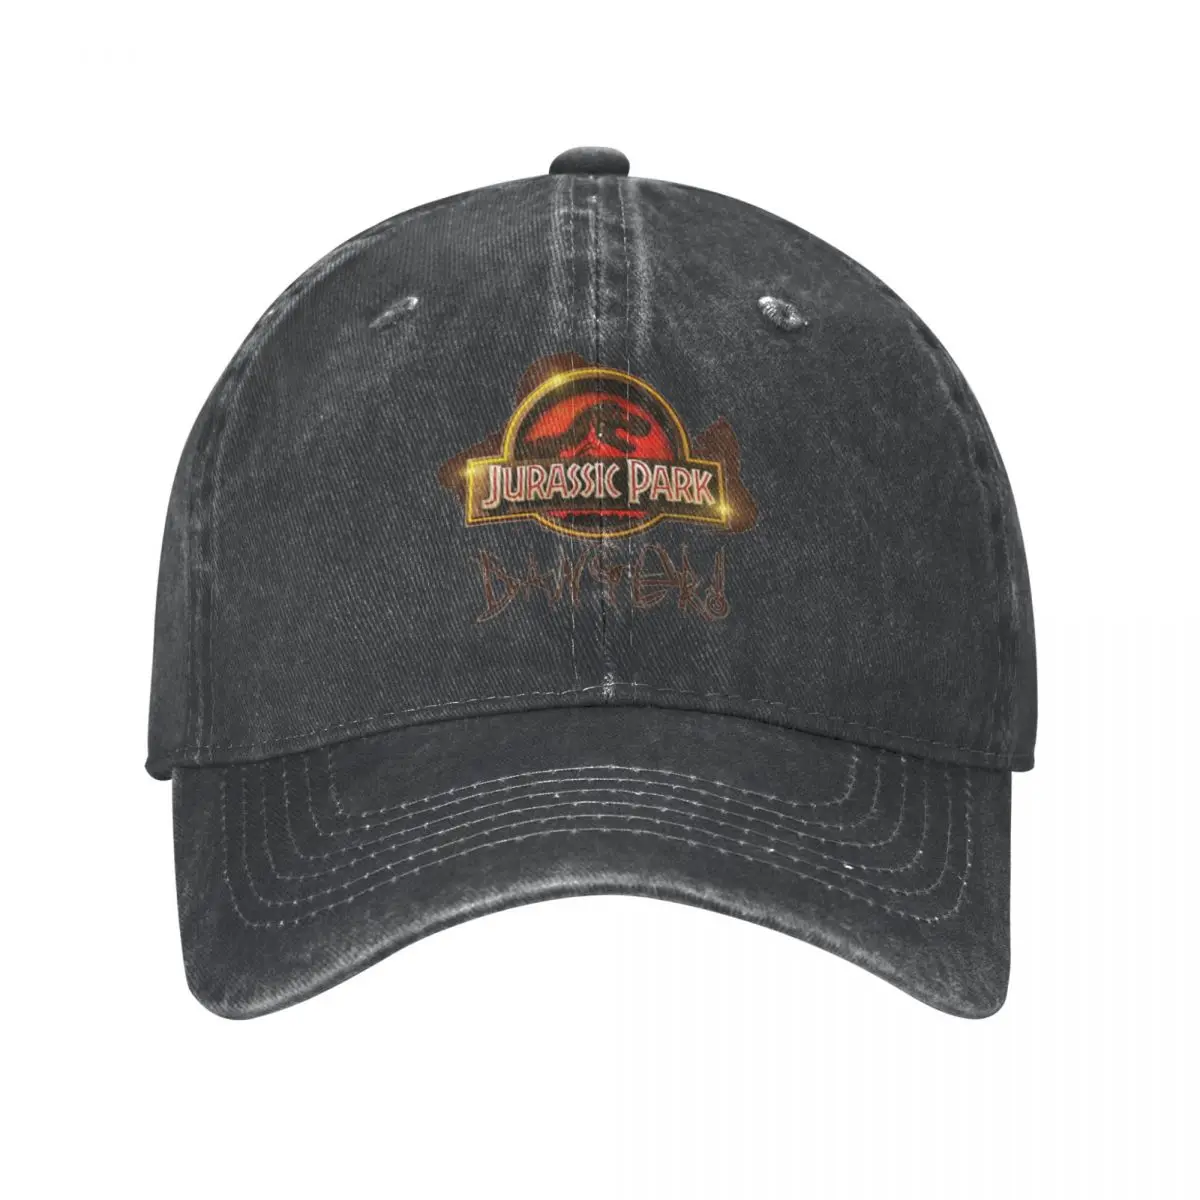 

Jurassic Parks Danger World Dinosaur Baseball Cap Vintage Distressed Cotton Headwear for Men Outdoor All Seasons Travel Hats Cap